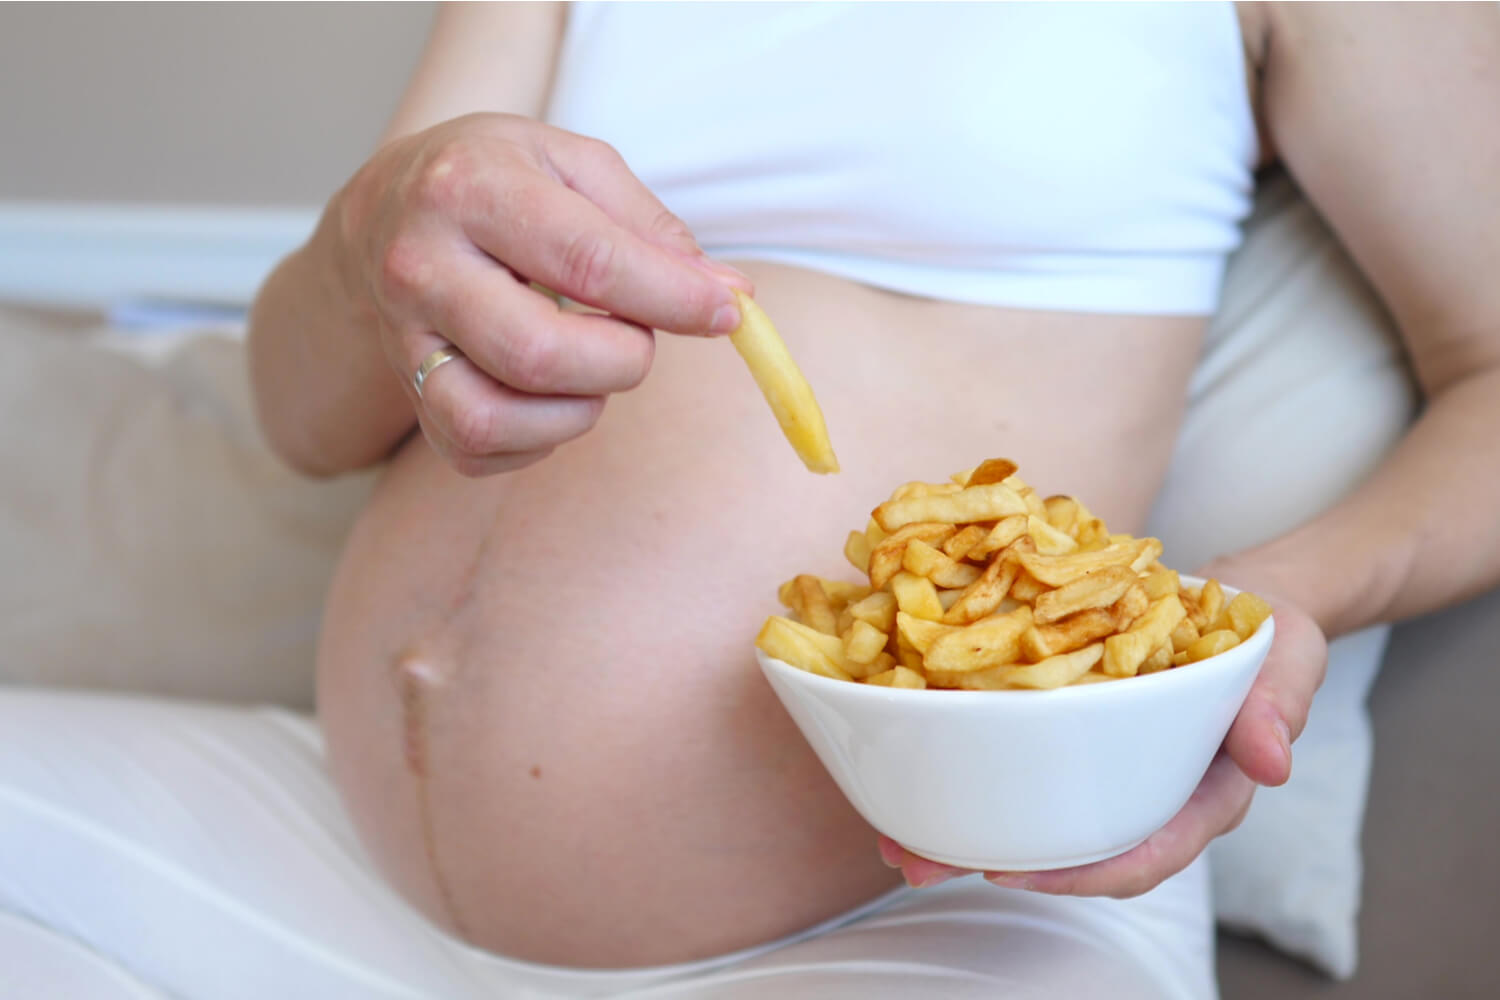 Pregnant woman eating frech fries